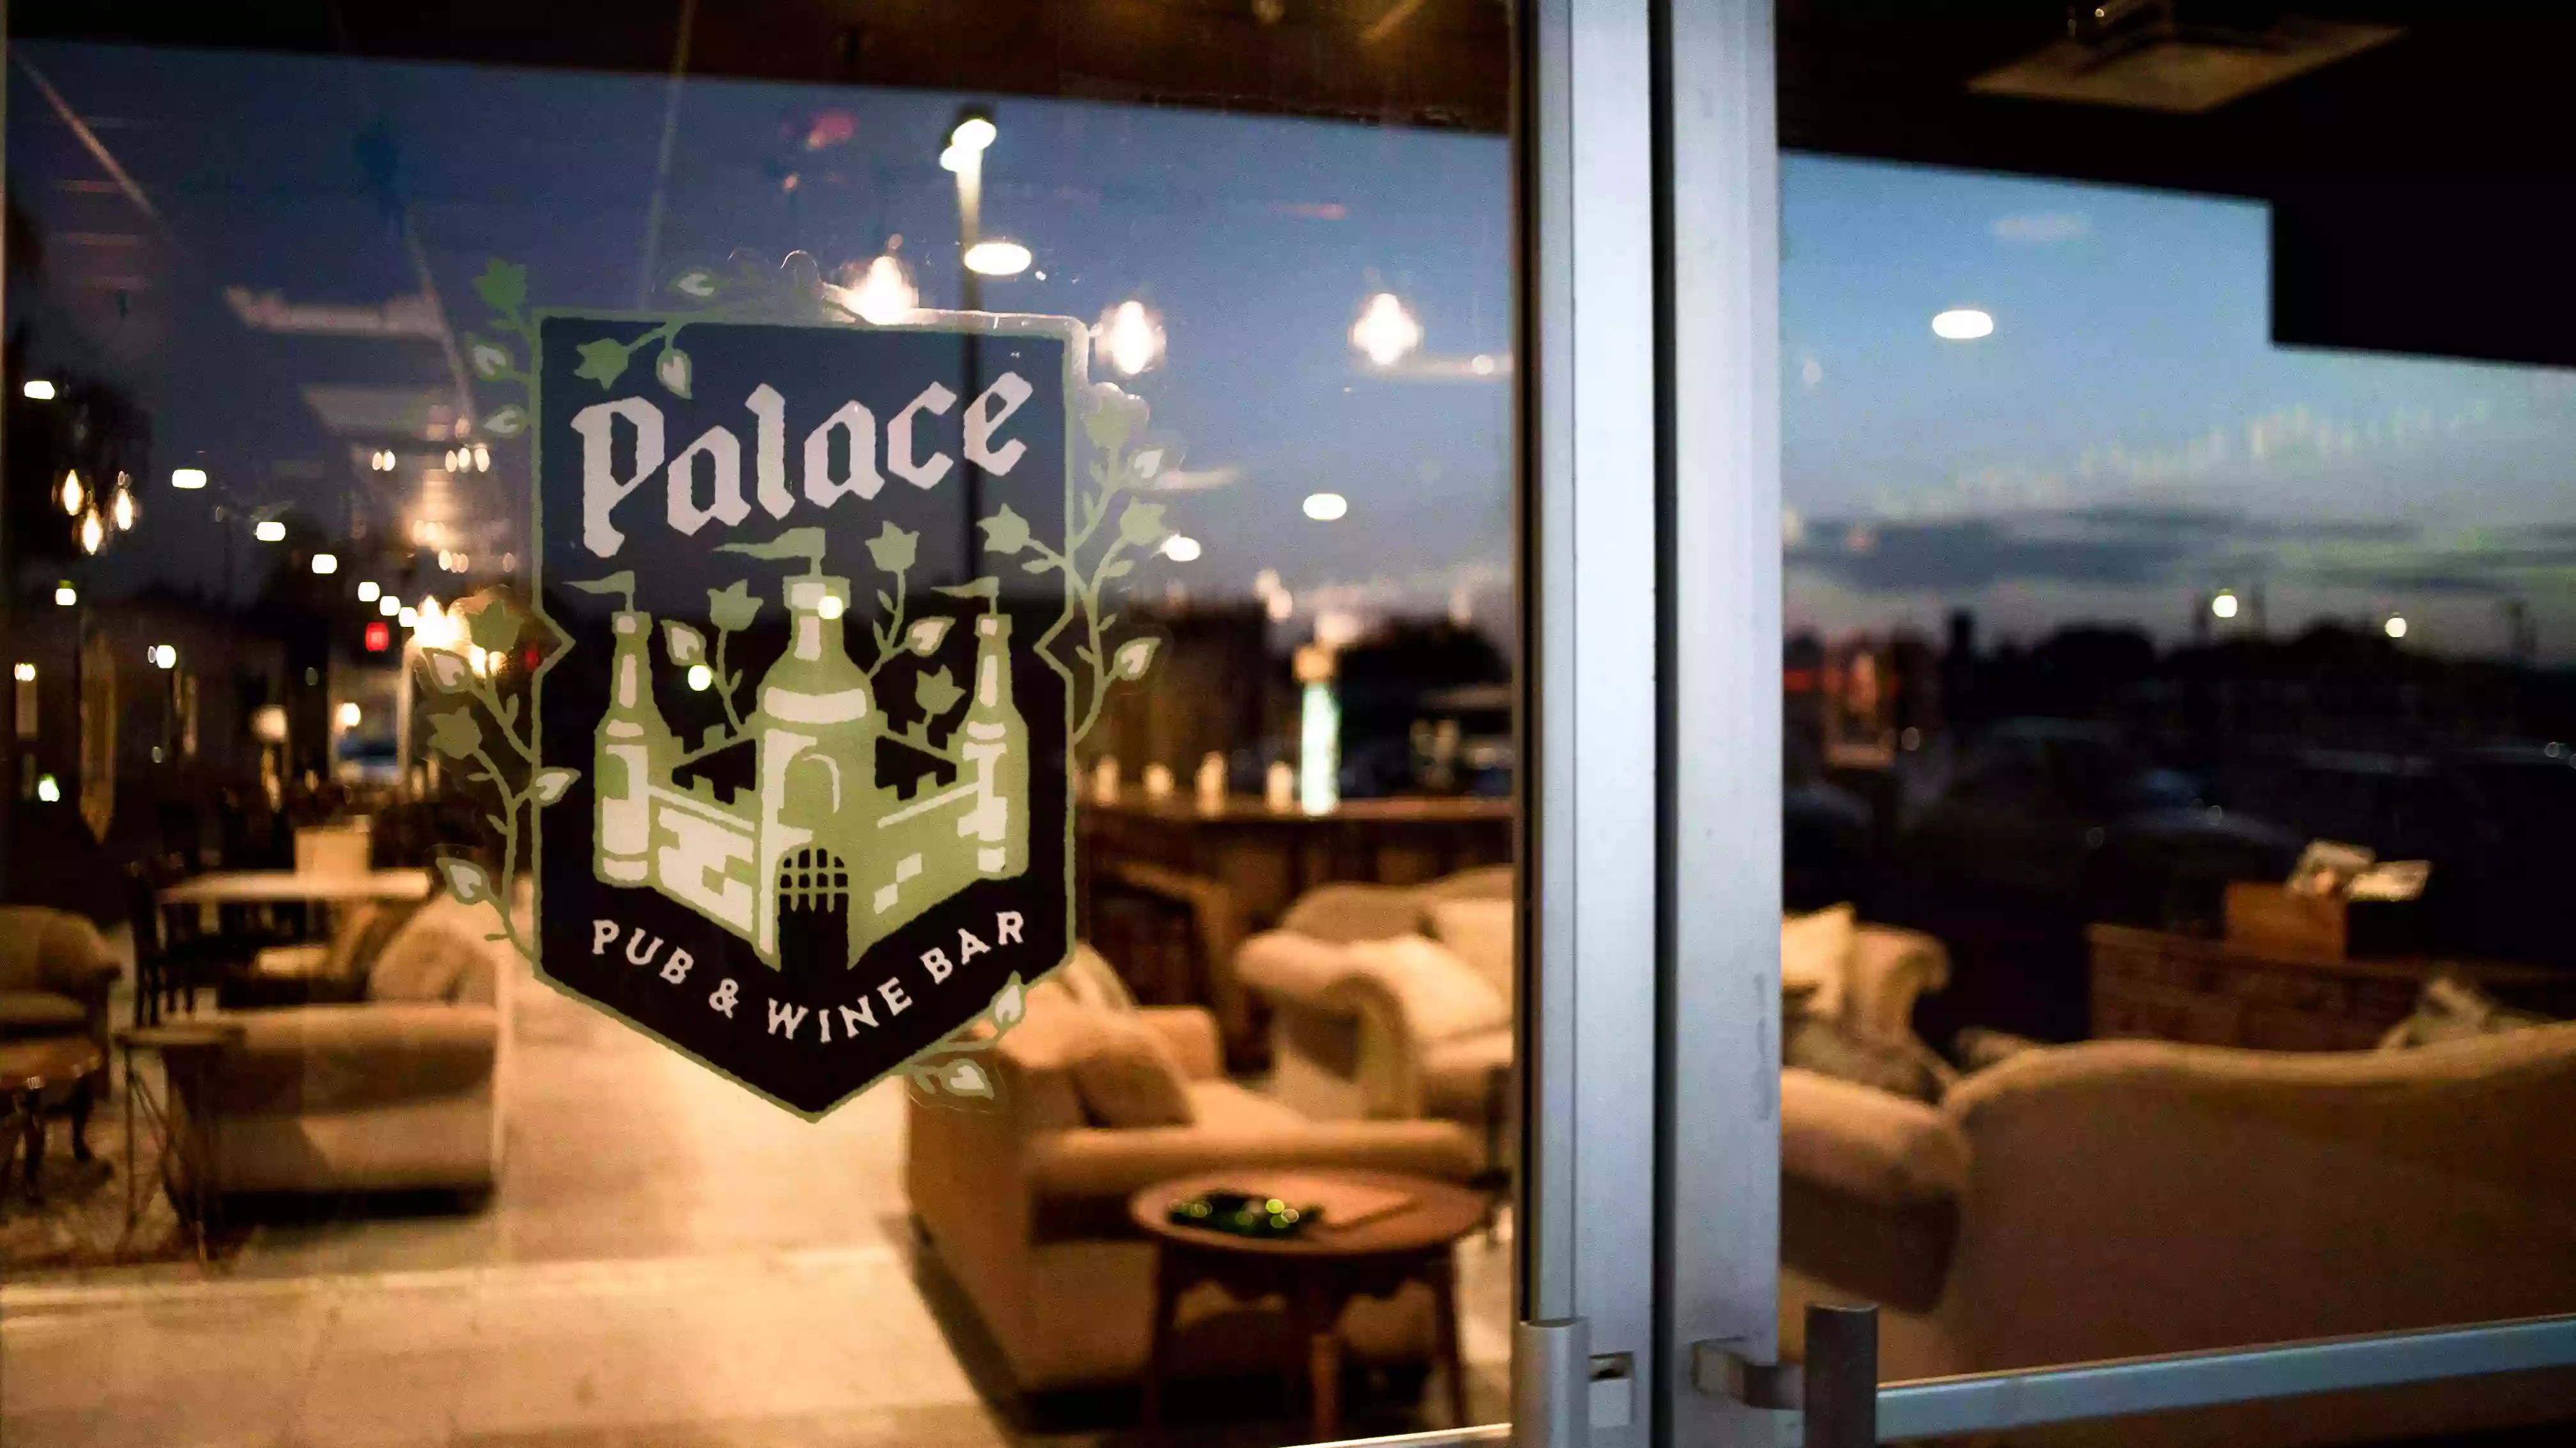 Palace Pub & Wine Bar